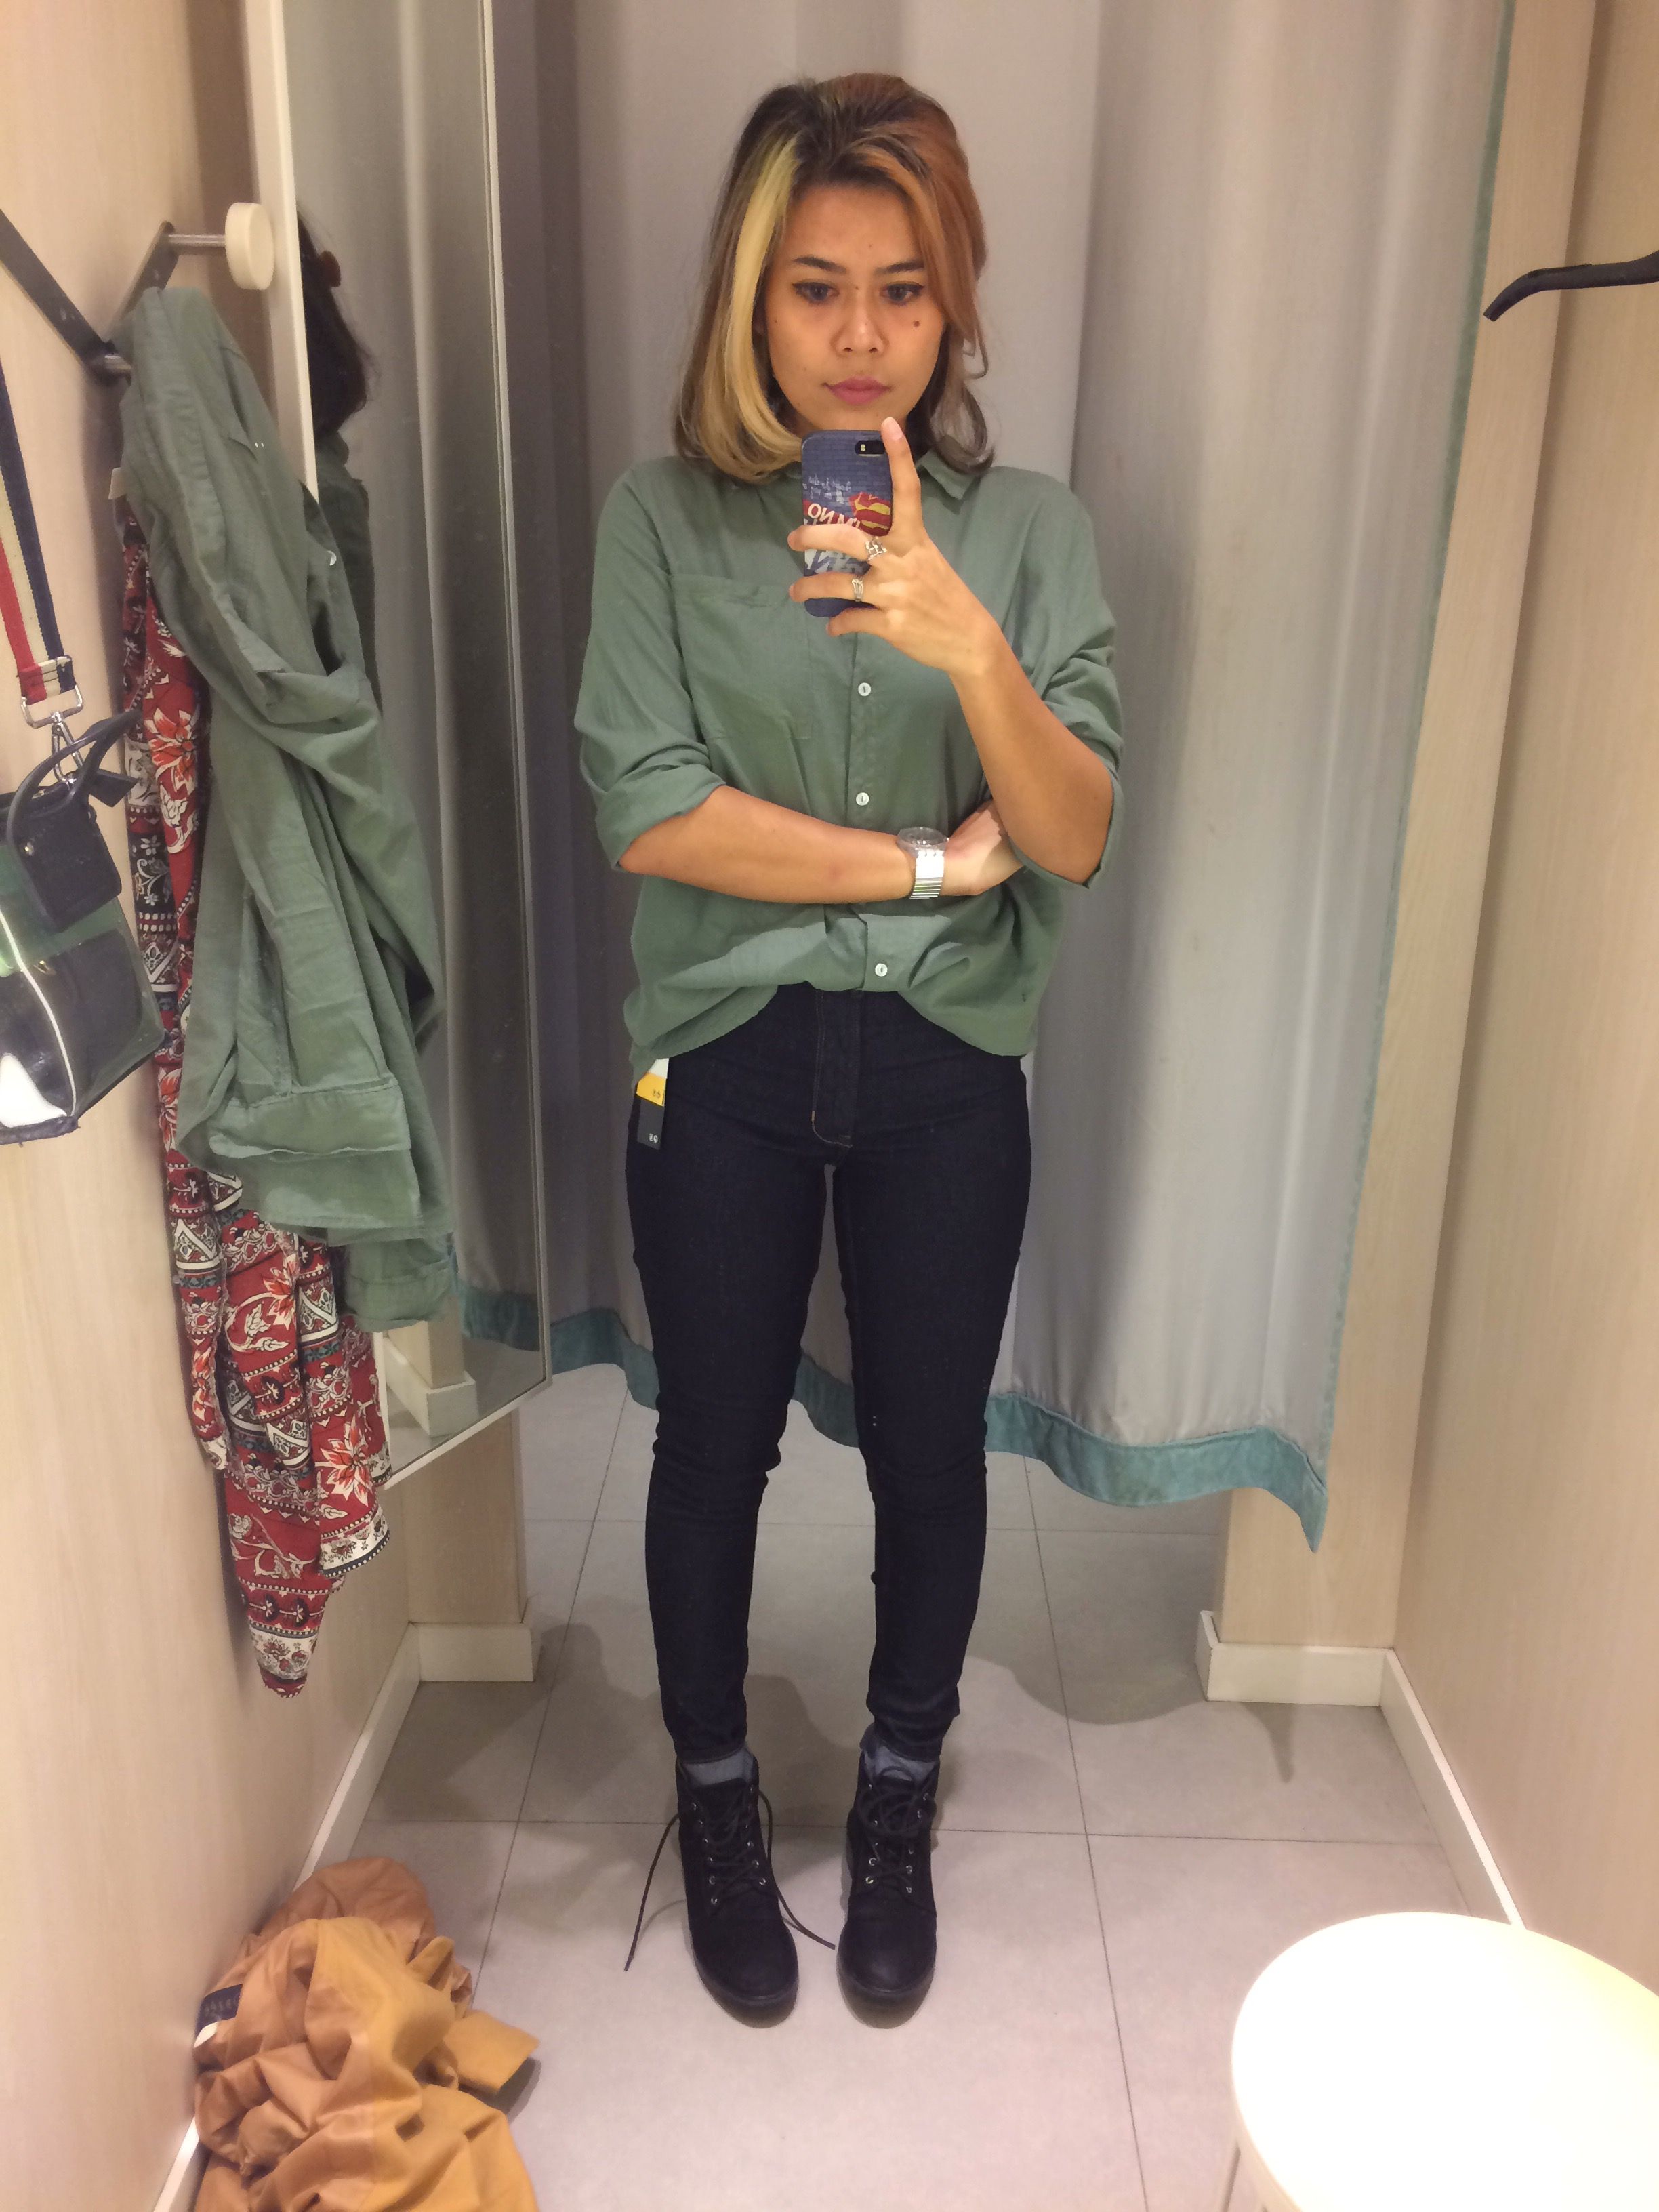 Selfie in the fitting room